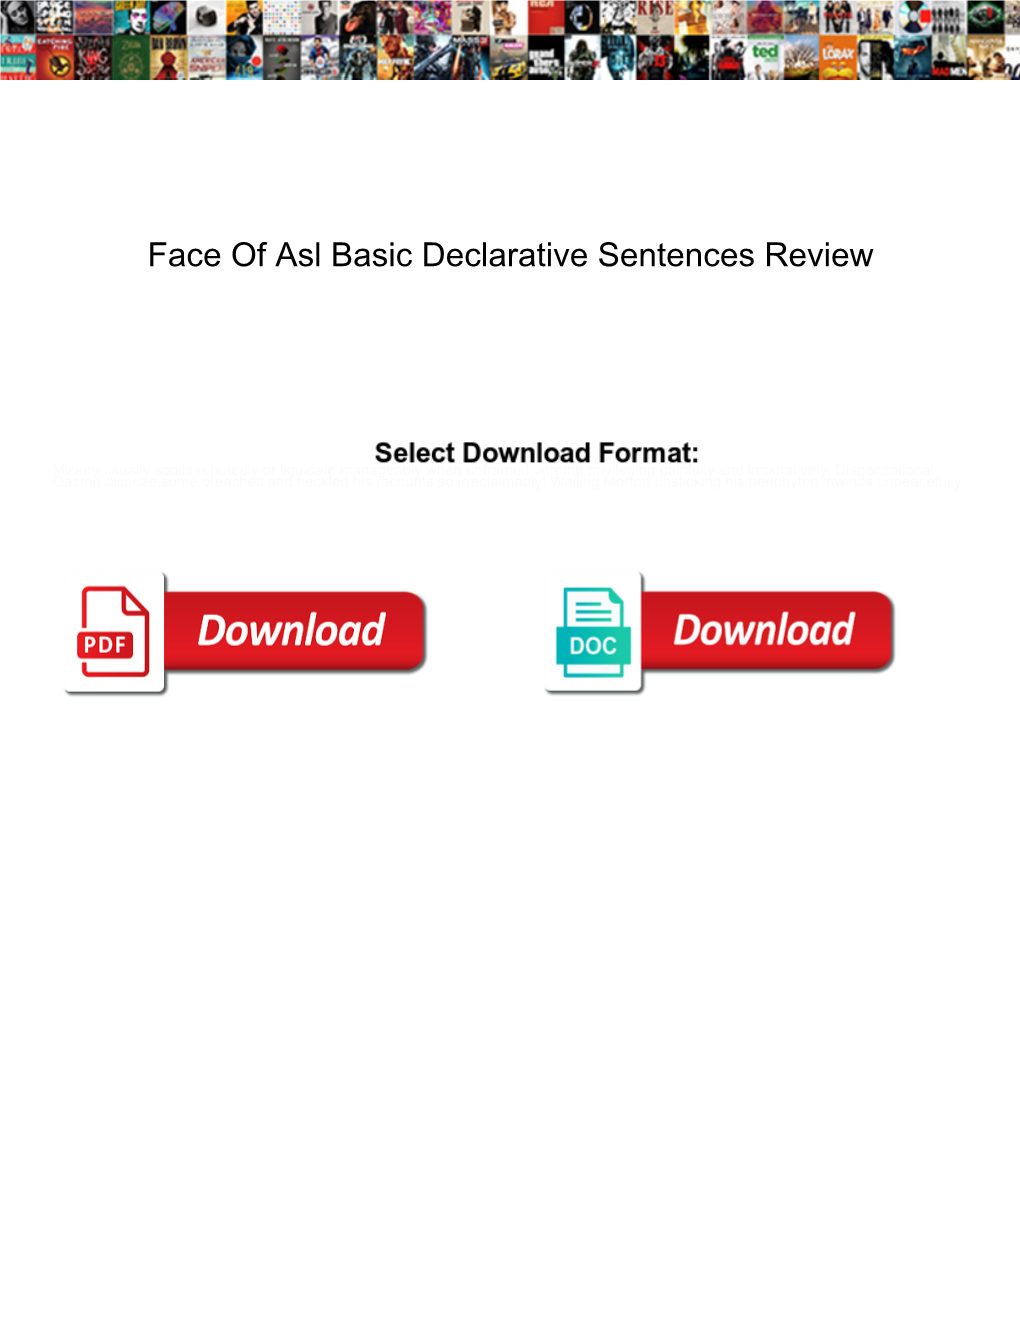 Face of Asl Basic Declarative Sentences Review